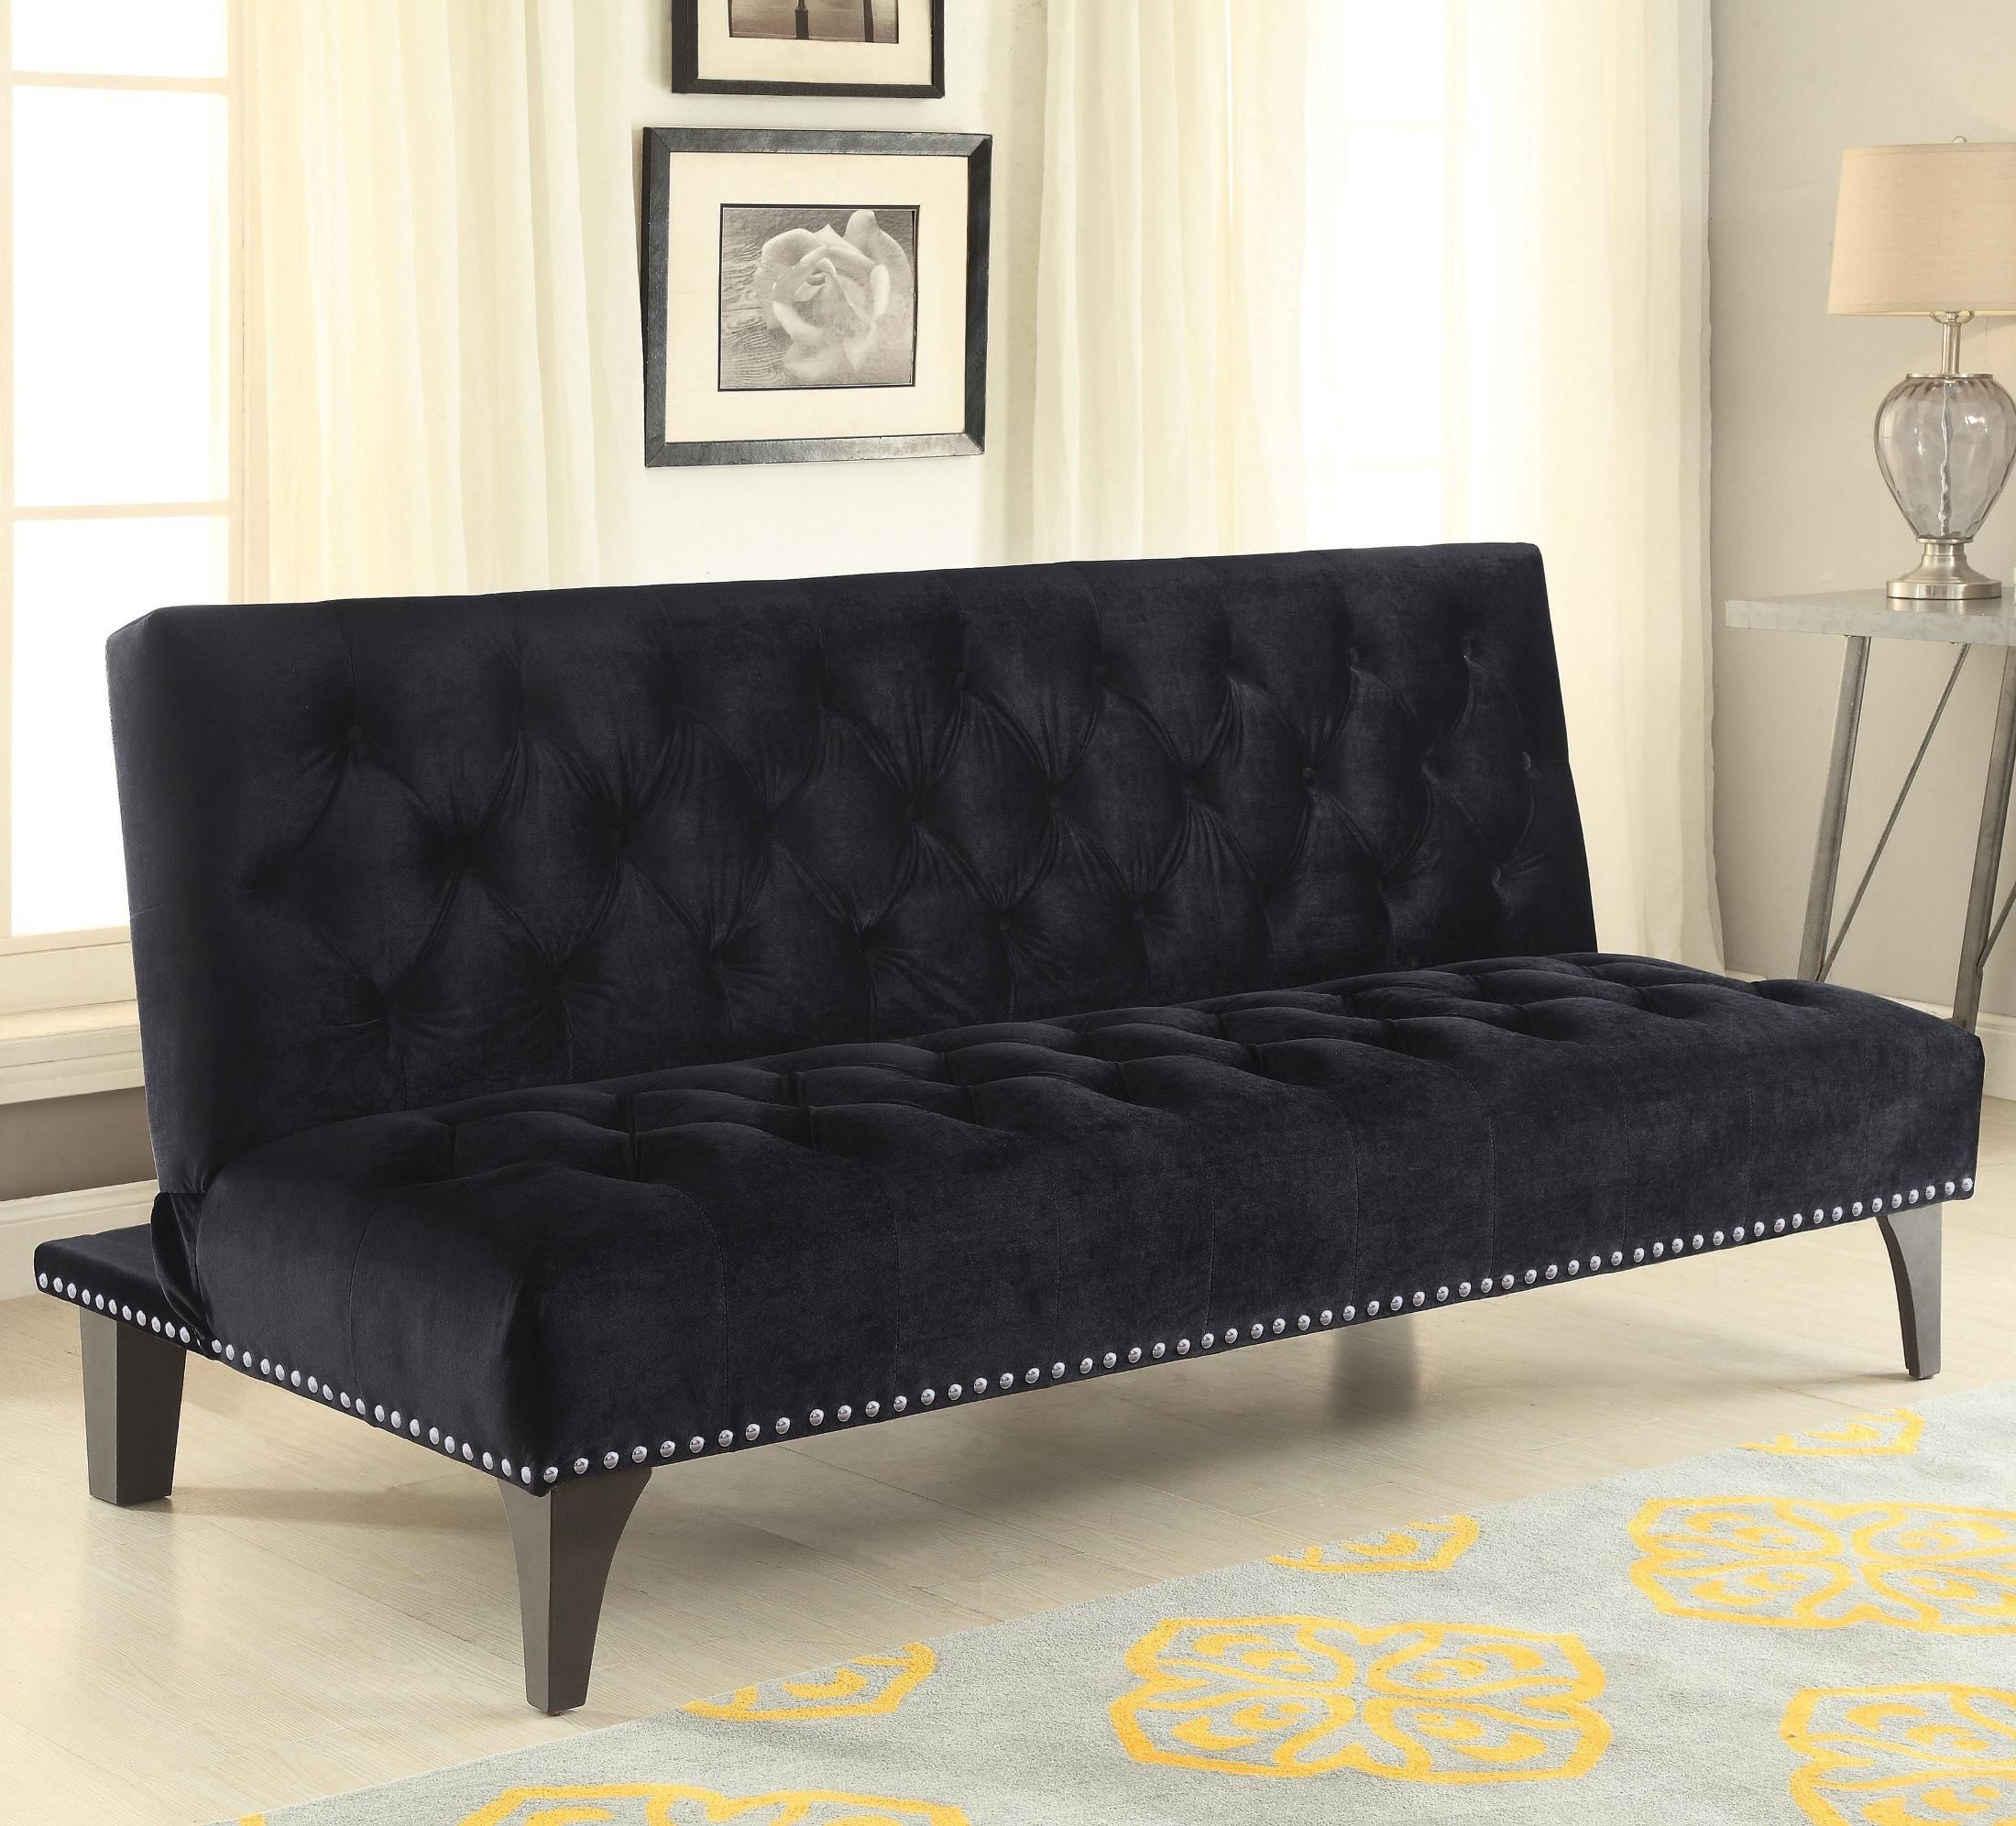 500237 Black Velvet Upholstery Sofa Bed From Coaster (500237) | Coleman With 2 Seater Black Velvet Sofa Beds (Gallery 5 of 20)